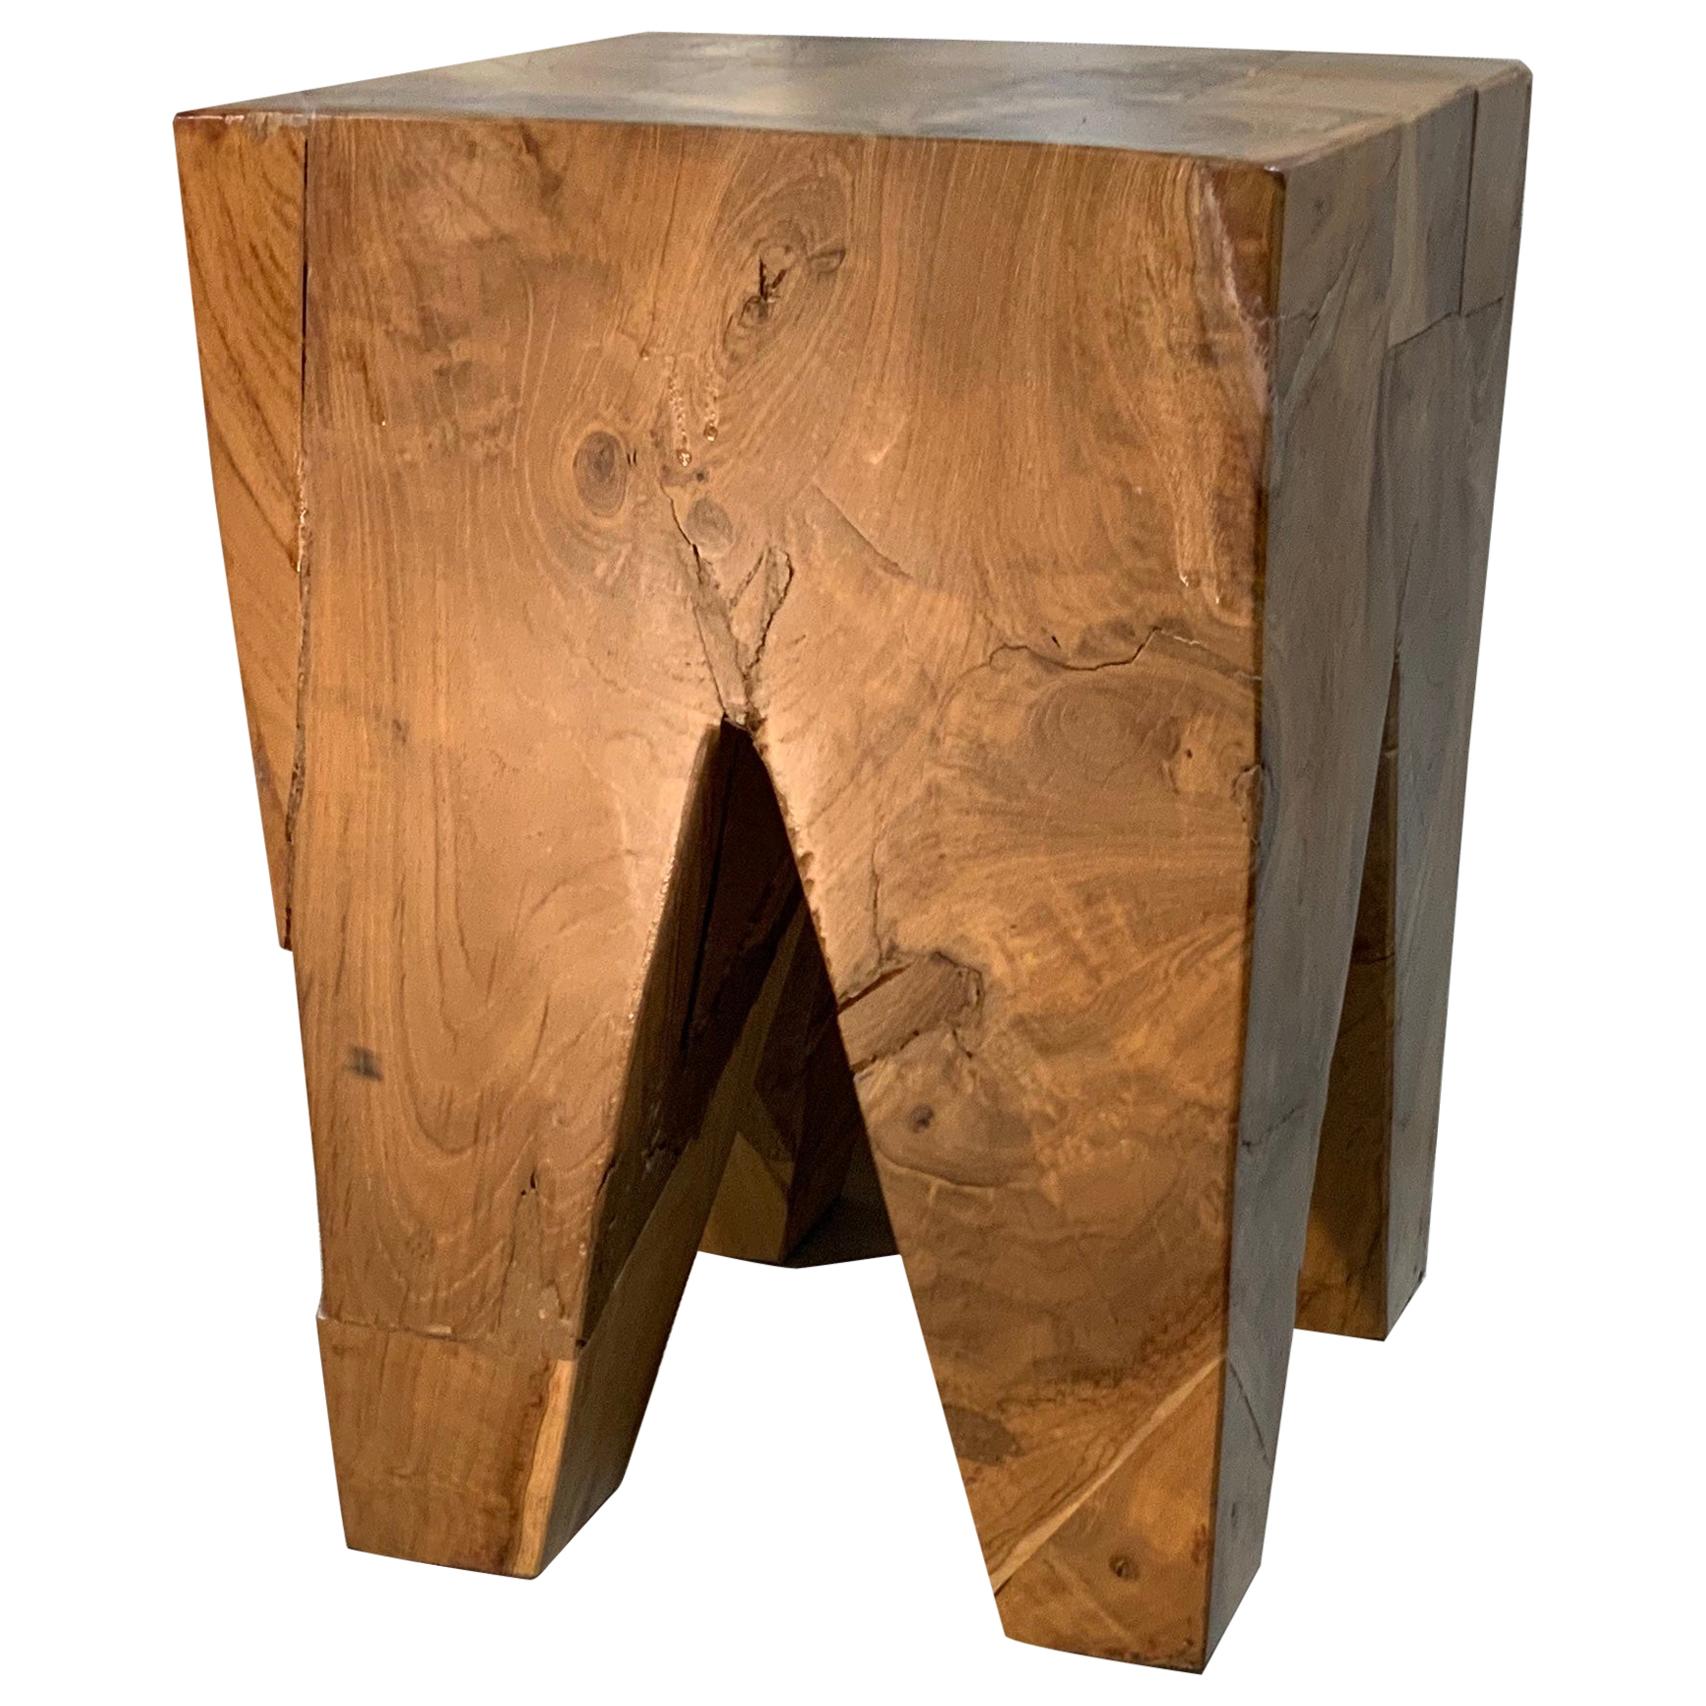 Wood Stool or Rustic Side Table